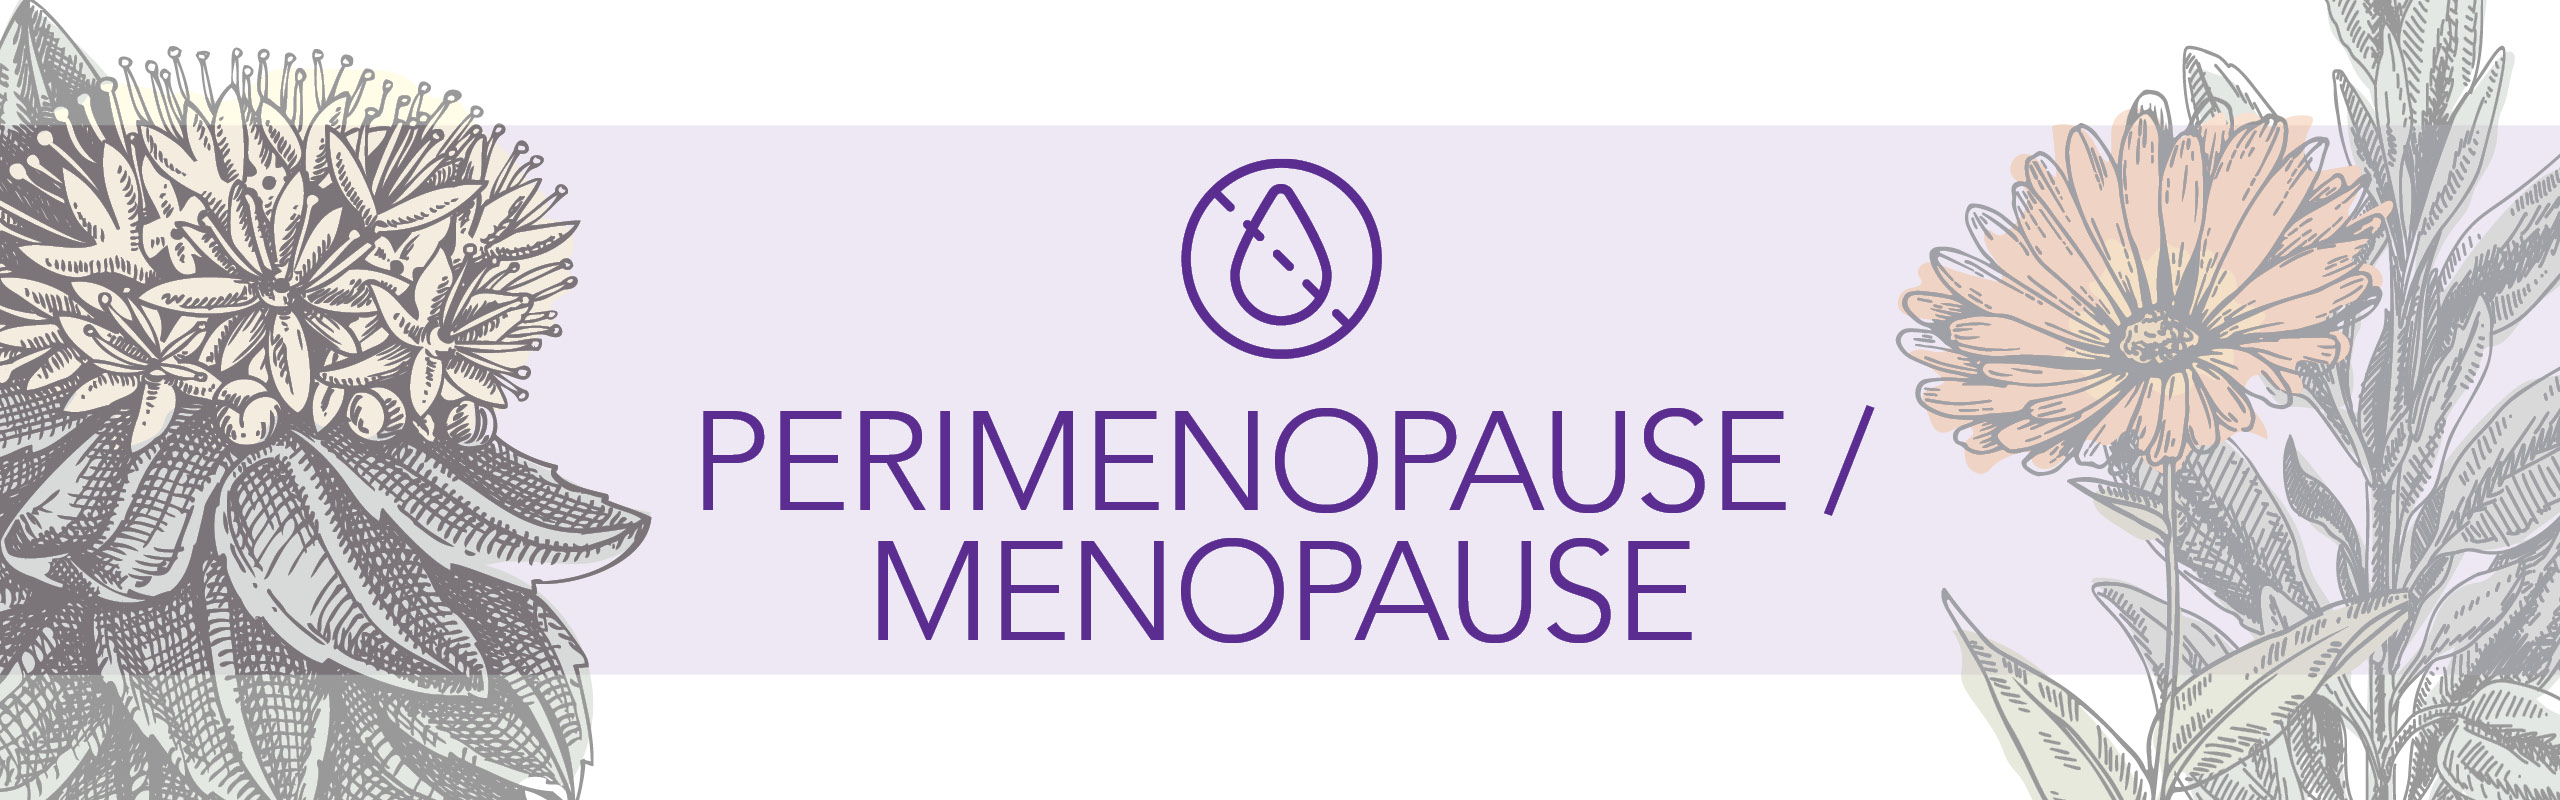 Perimenopause/menopause